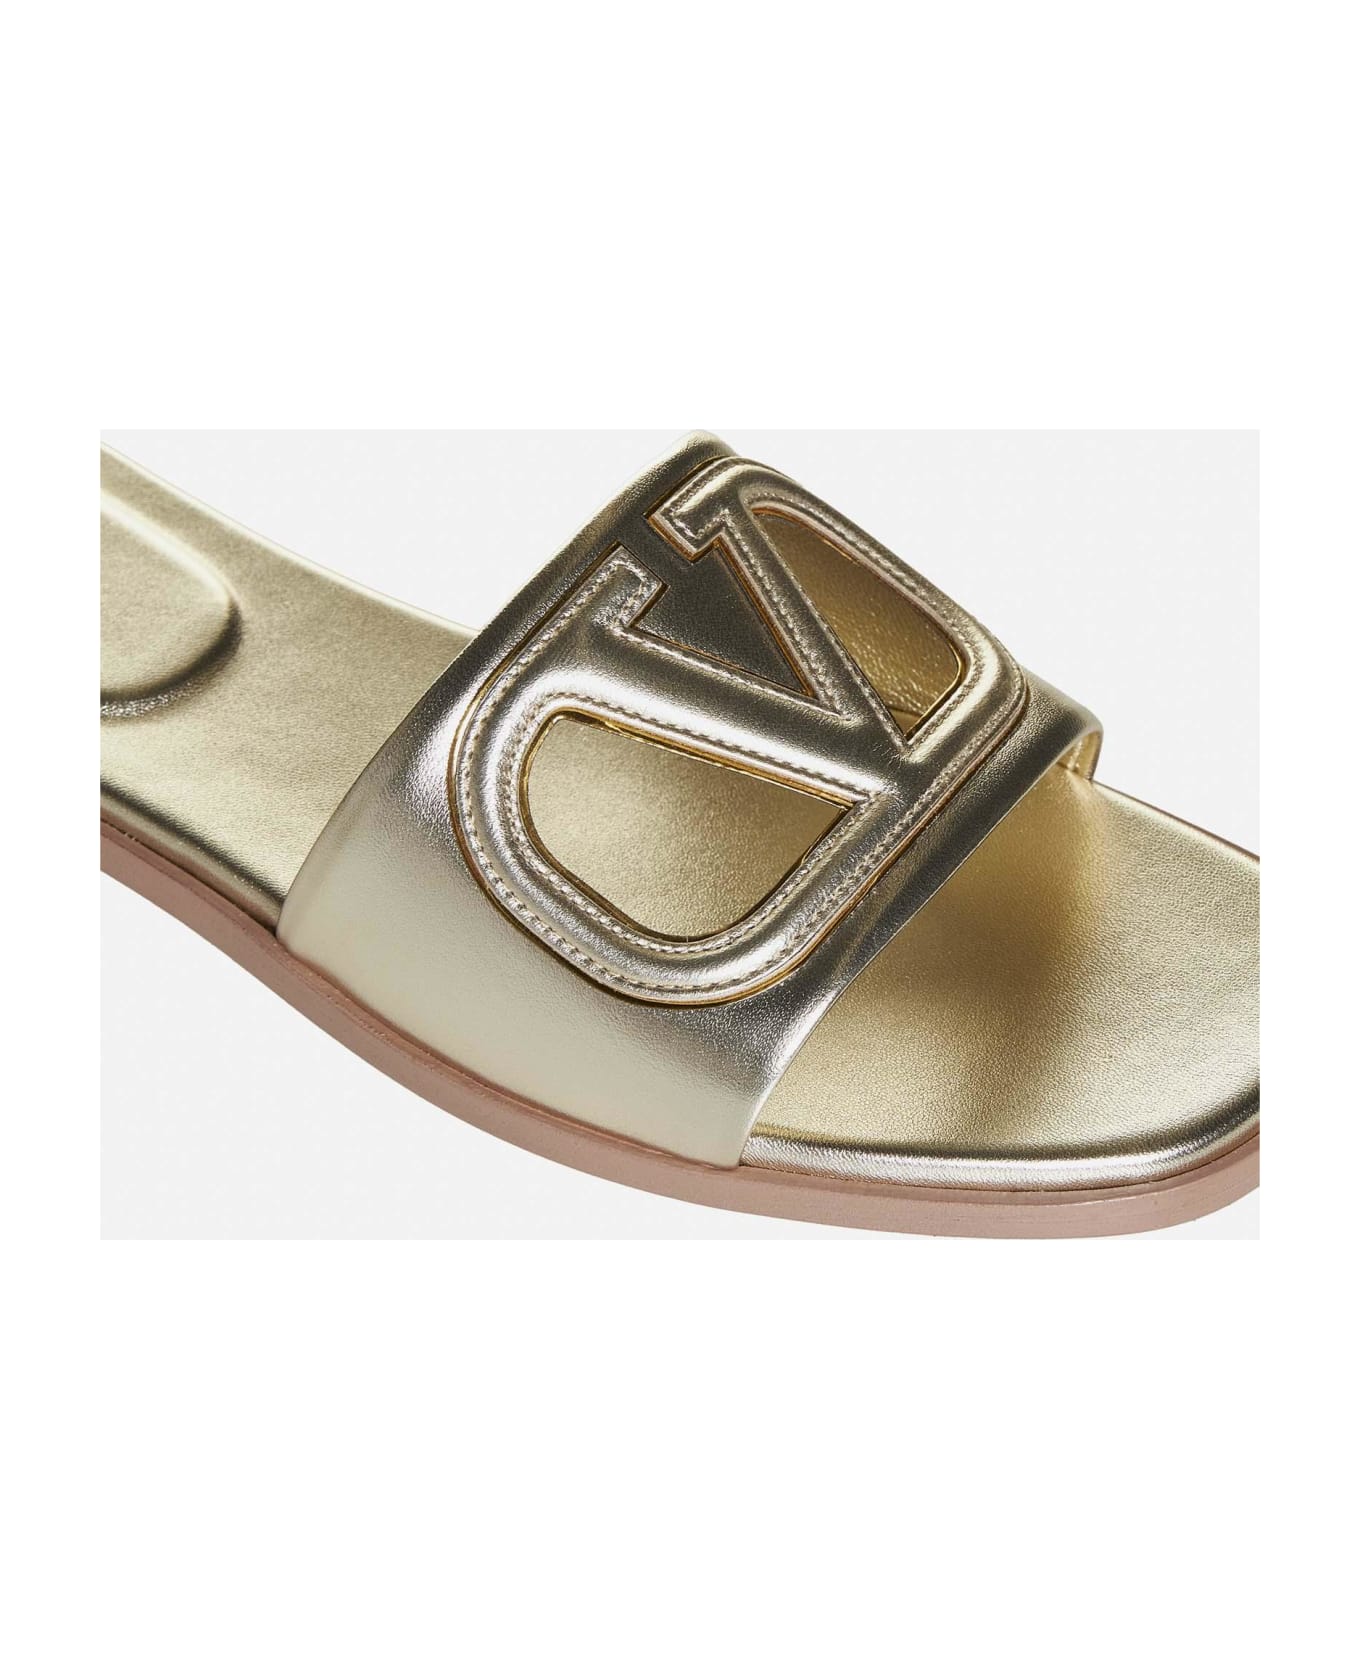 Valentino Garavani Vlogo Cut-out Leather Slides - Platino/antique brass